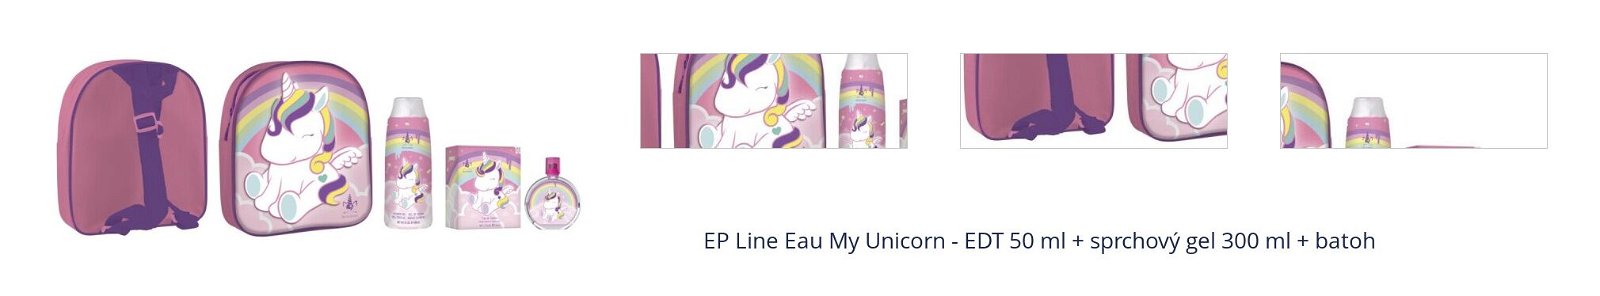 EP Line Eau My Unicorn - EDT 50 ml + sprchový gel 300 ml + batoh 1